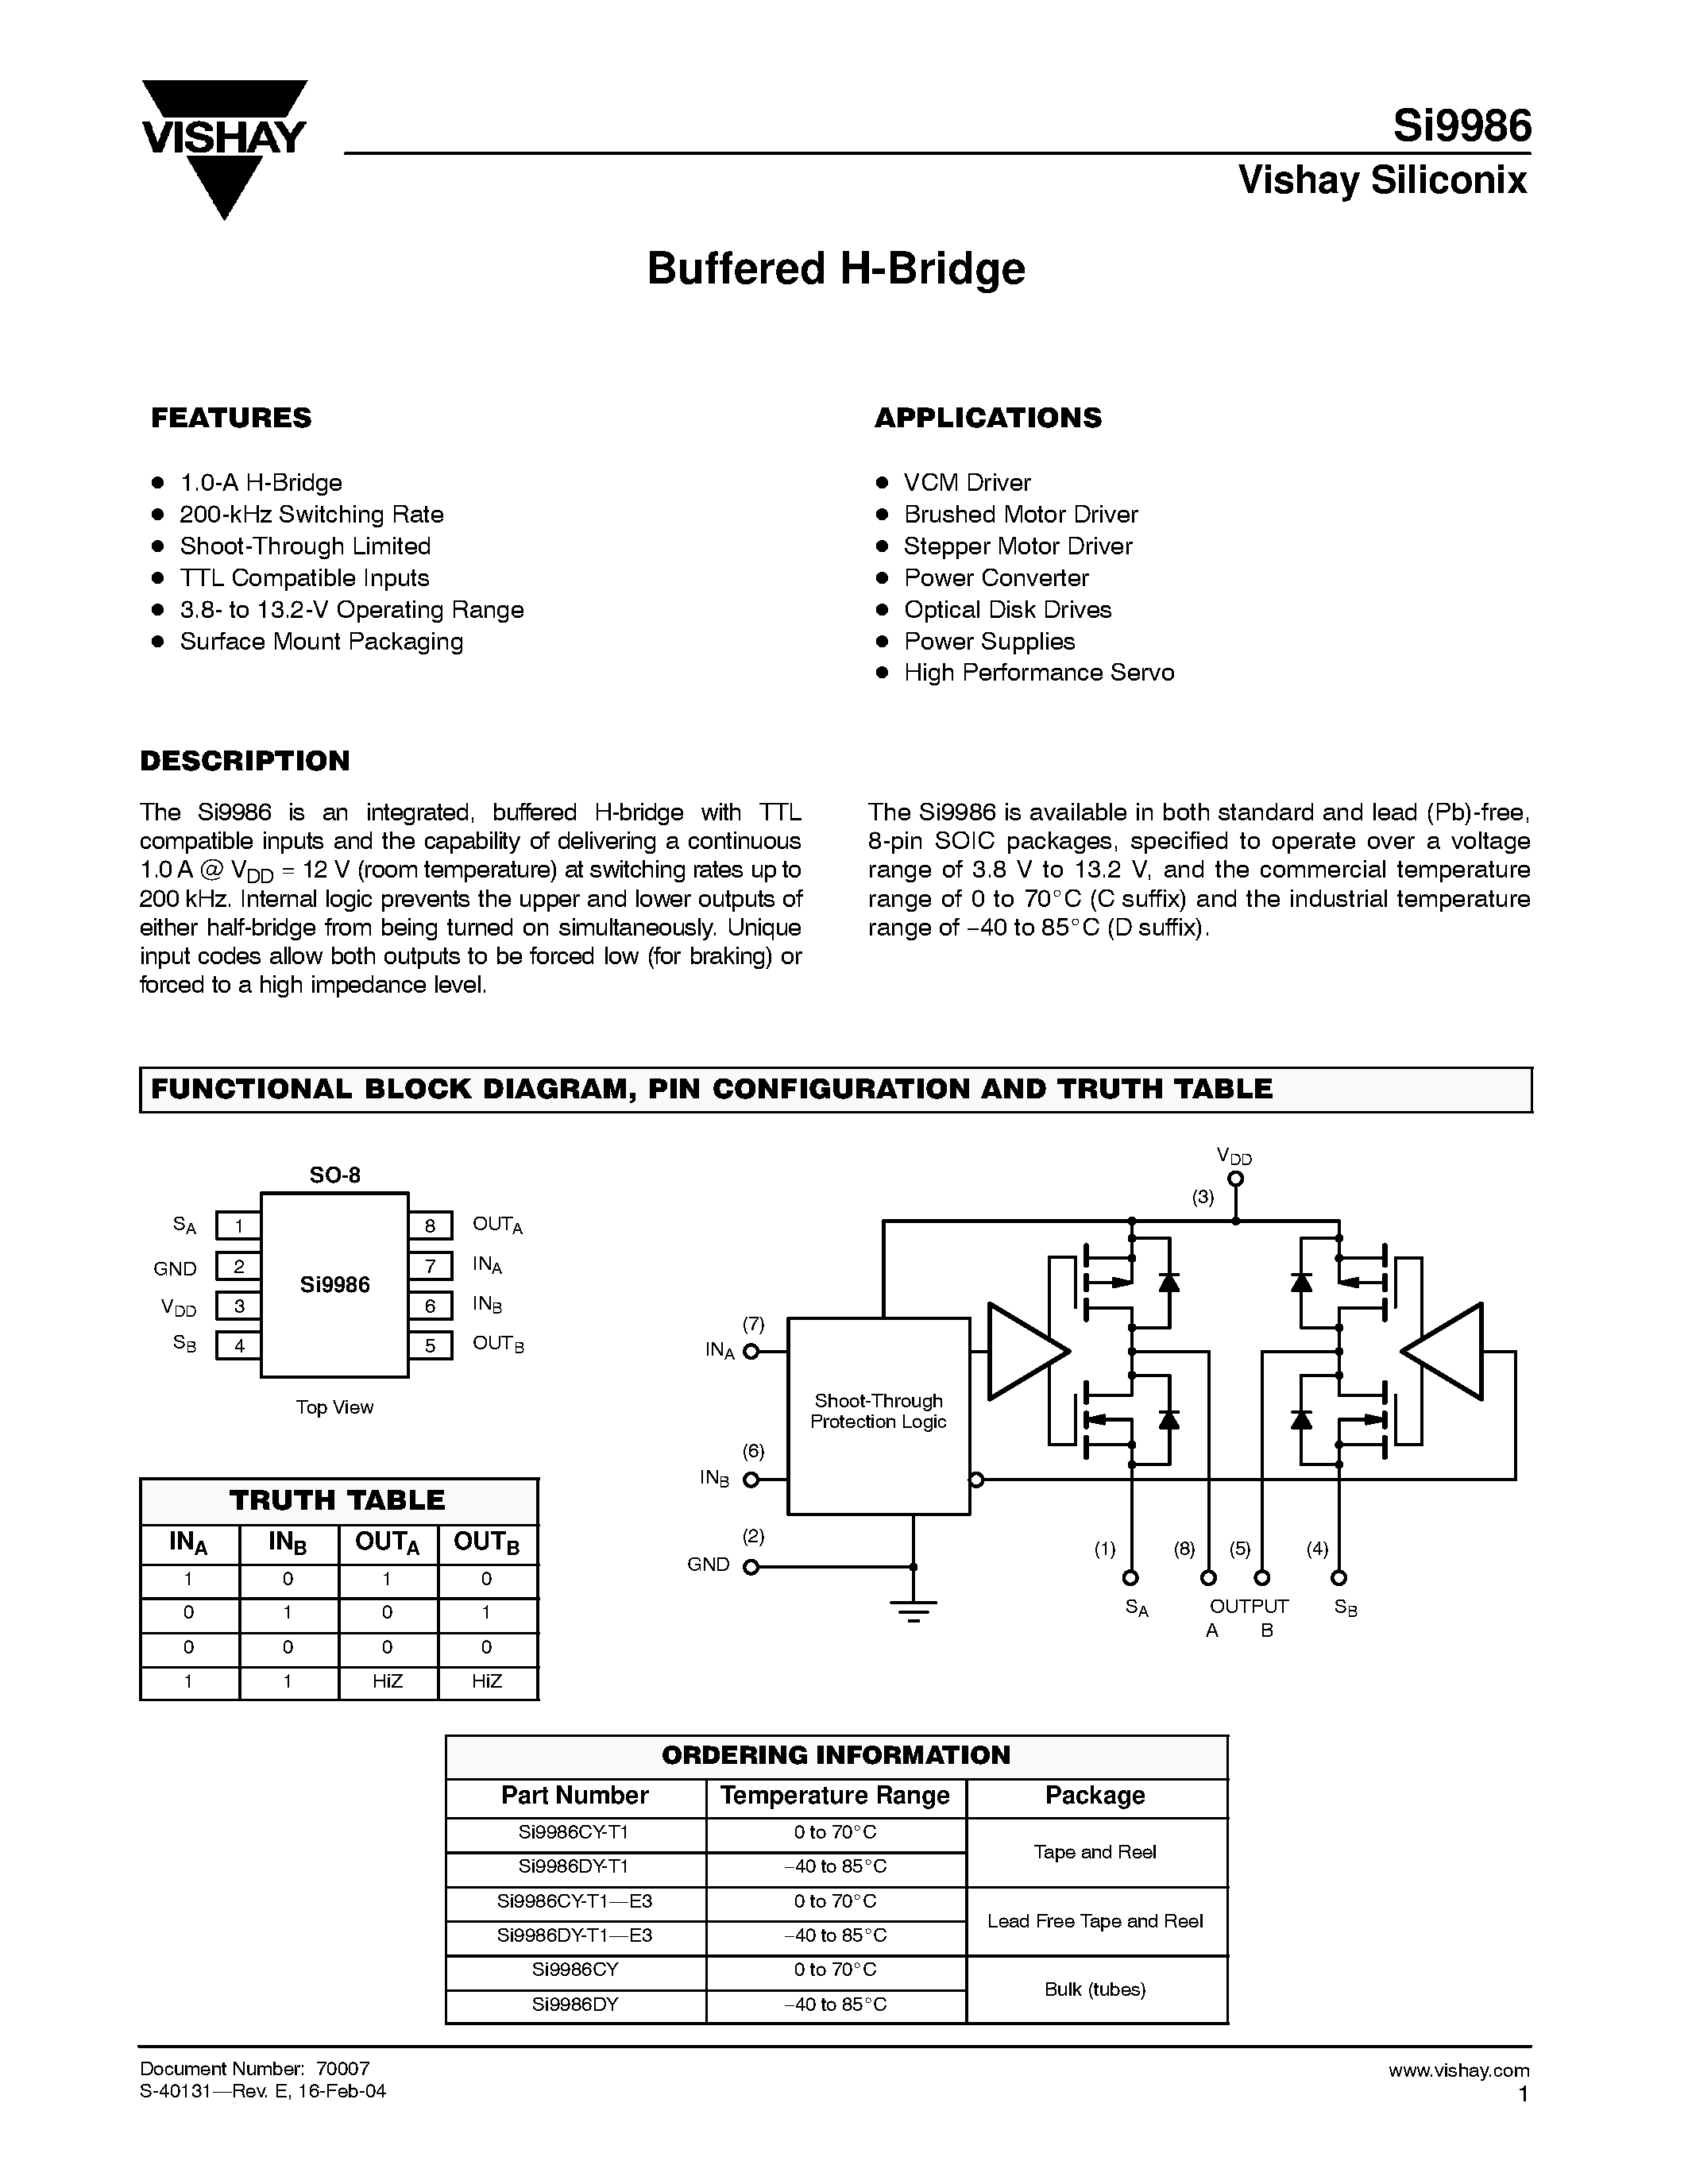 Datasheet SI9986 - Buffered H-Bridge page 1